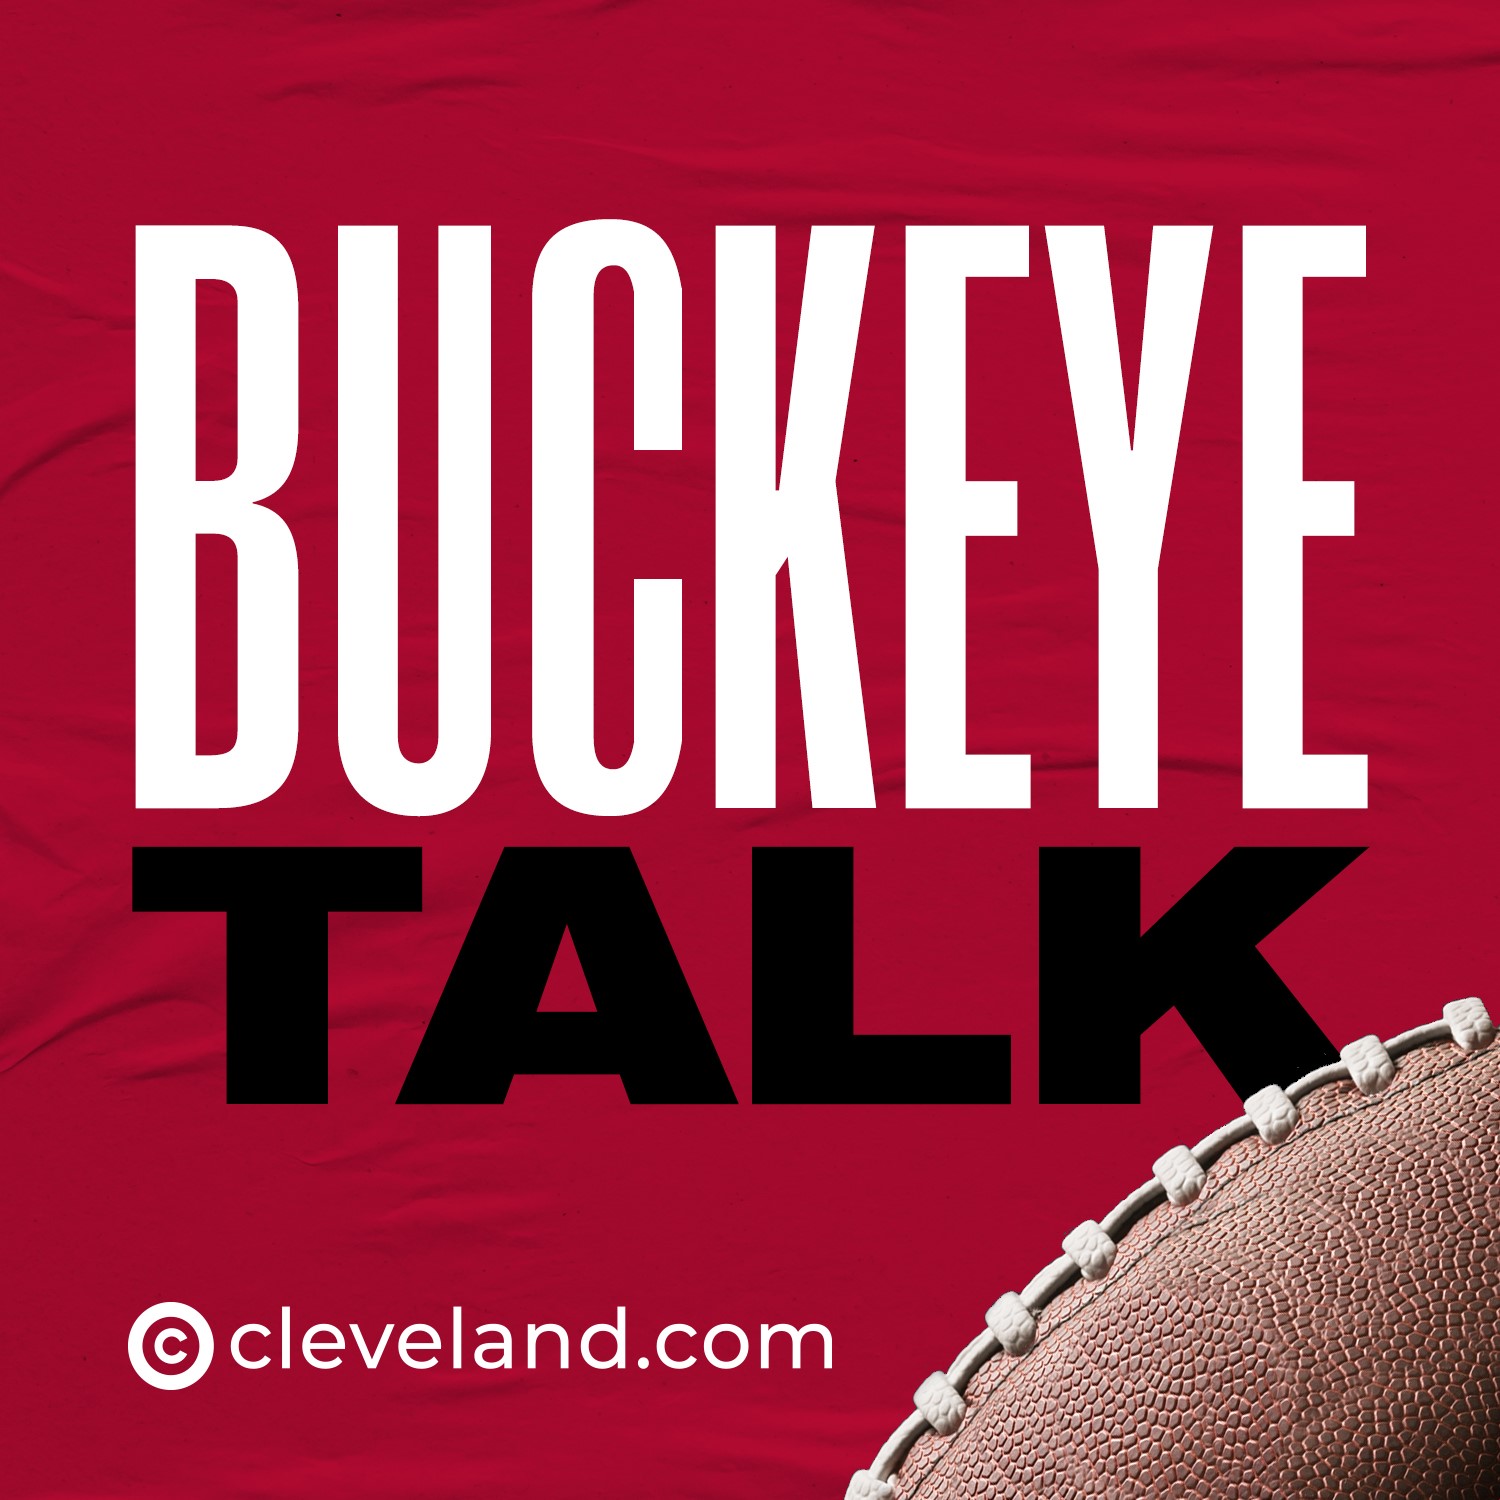 Ohio State Buckeyes Football & Basketball News 